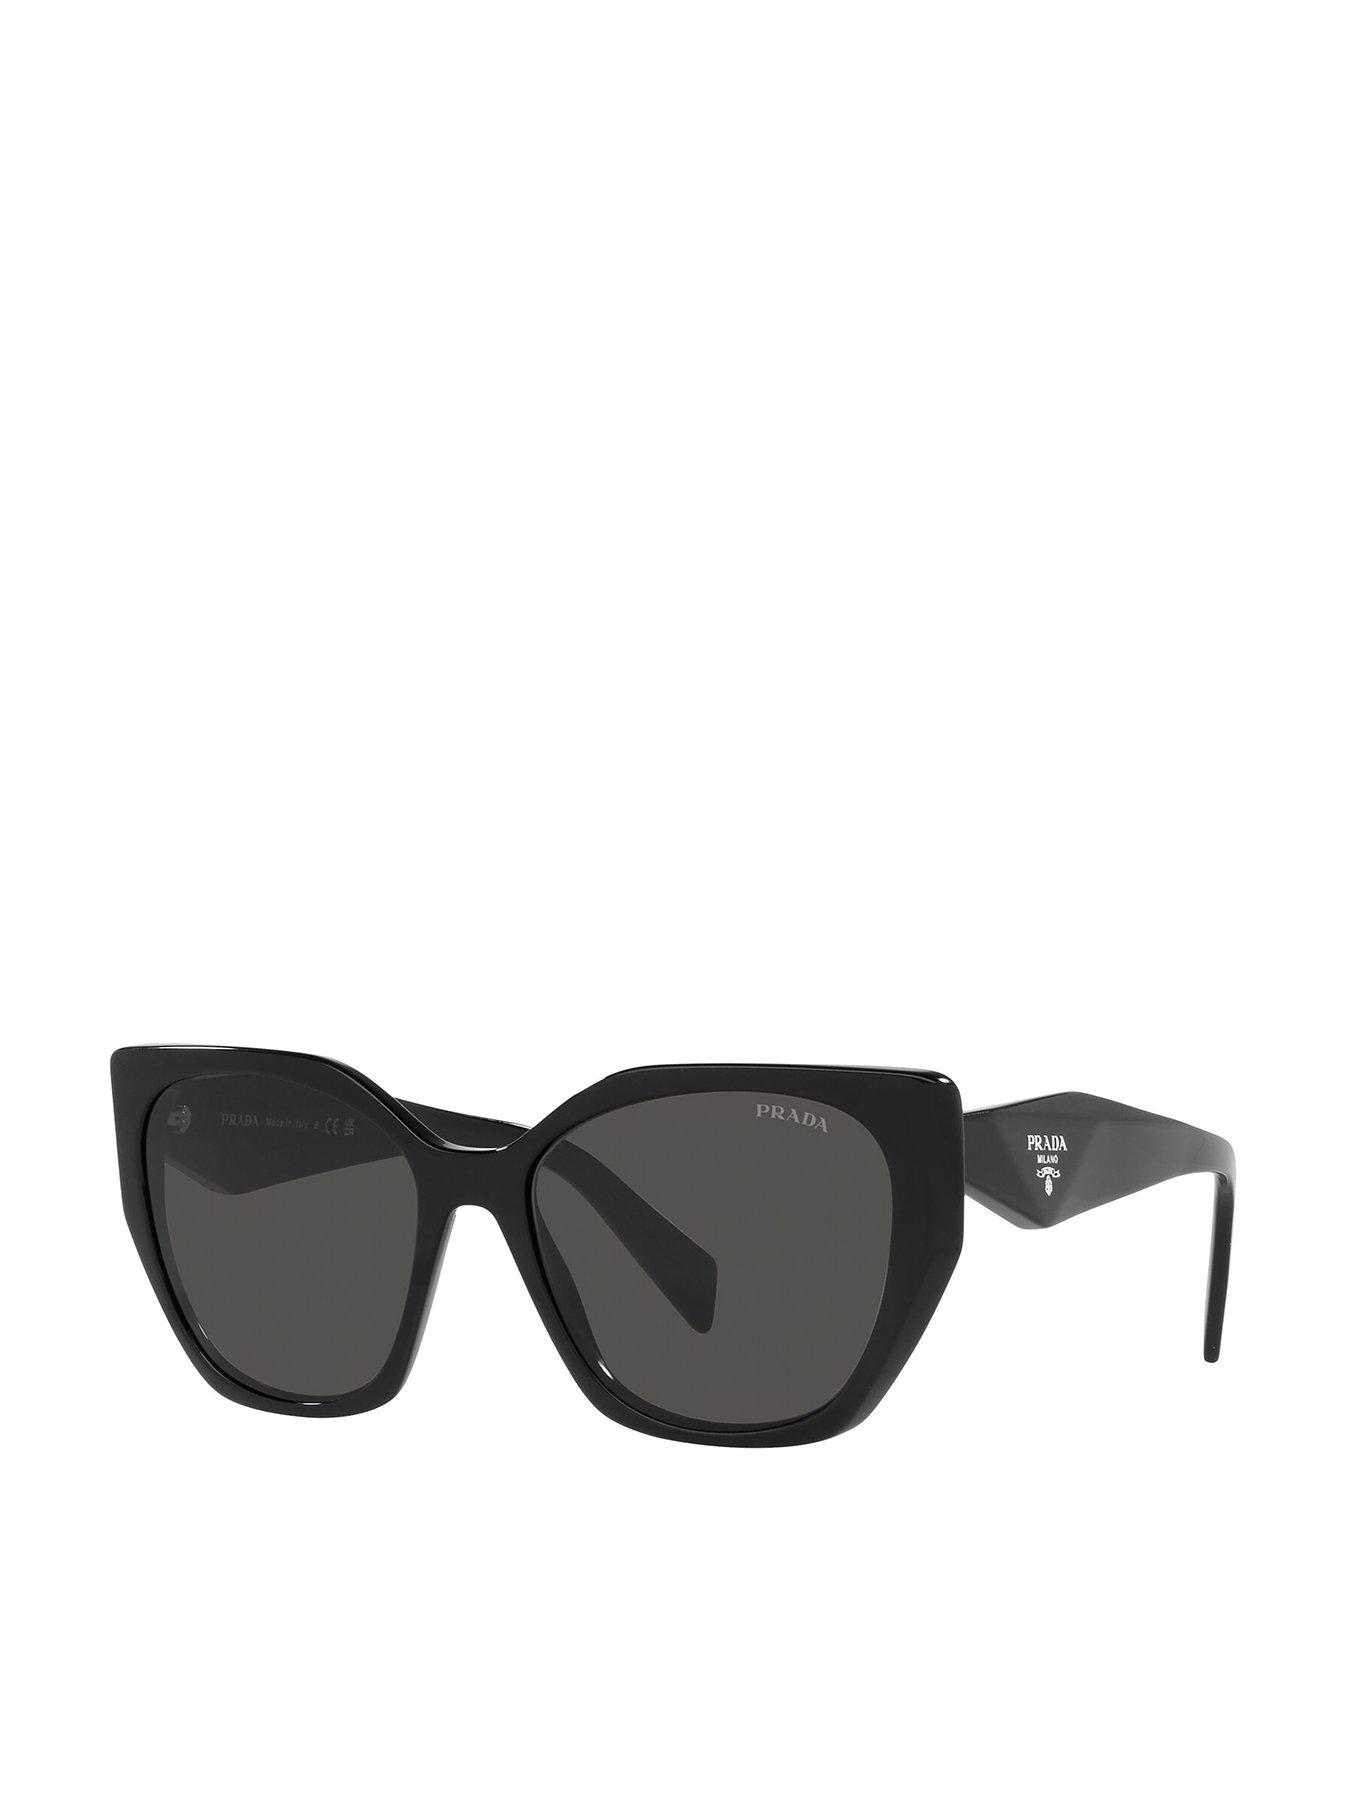 Prada PR17WS Sunglasses - Black / Dark Grey - Tortoise+Black